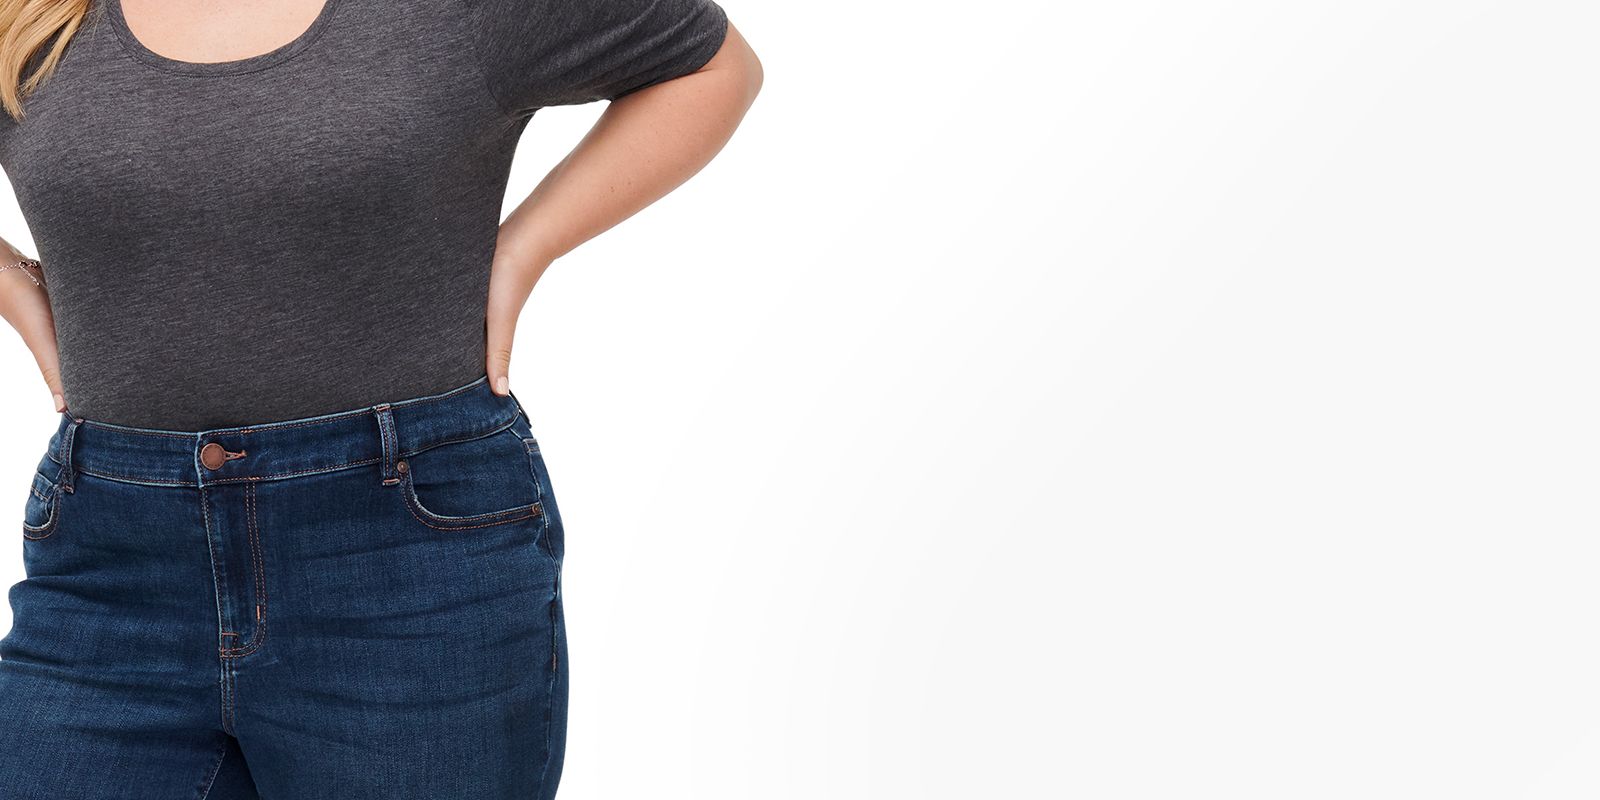 Secret slimming jeans background photo